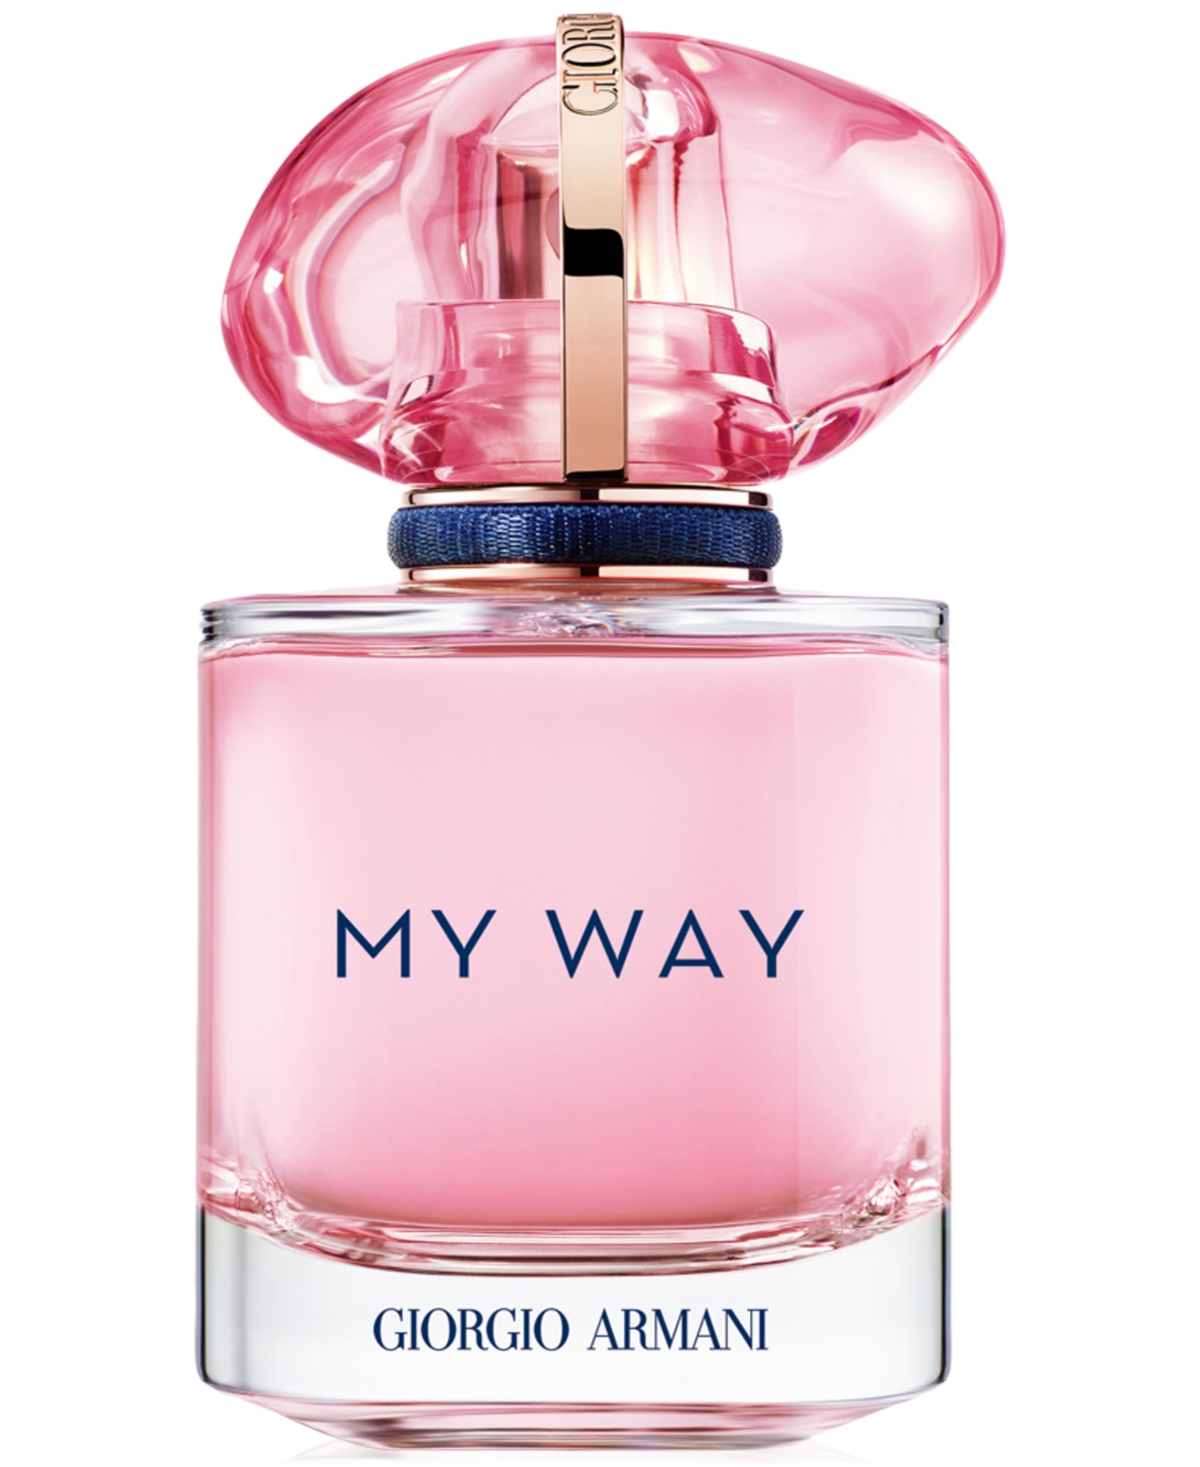 Armani Beauty My Way Eau de Parfum Nectar, 1 oz.